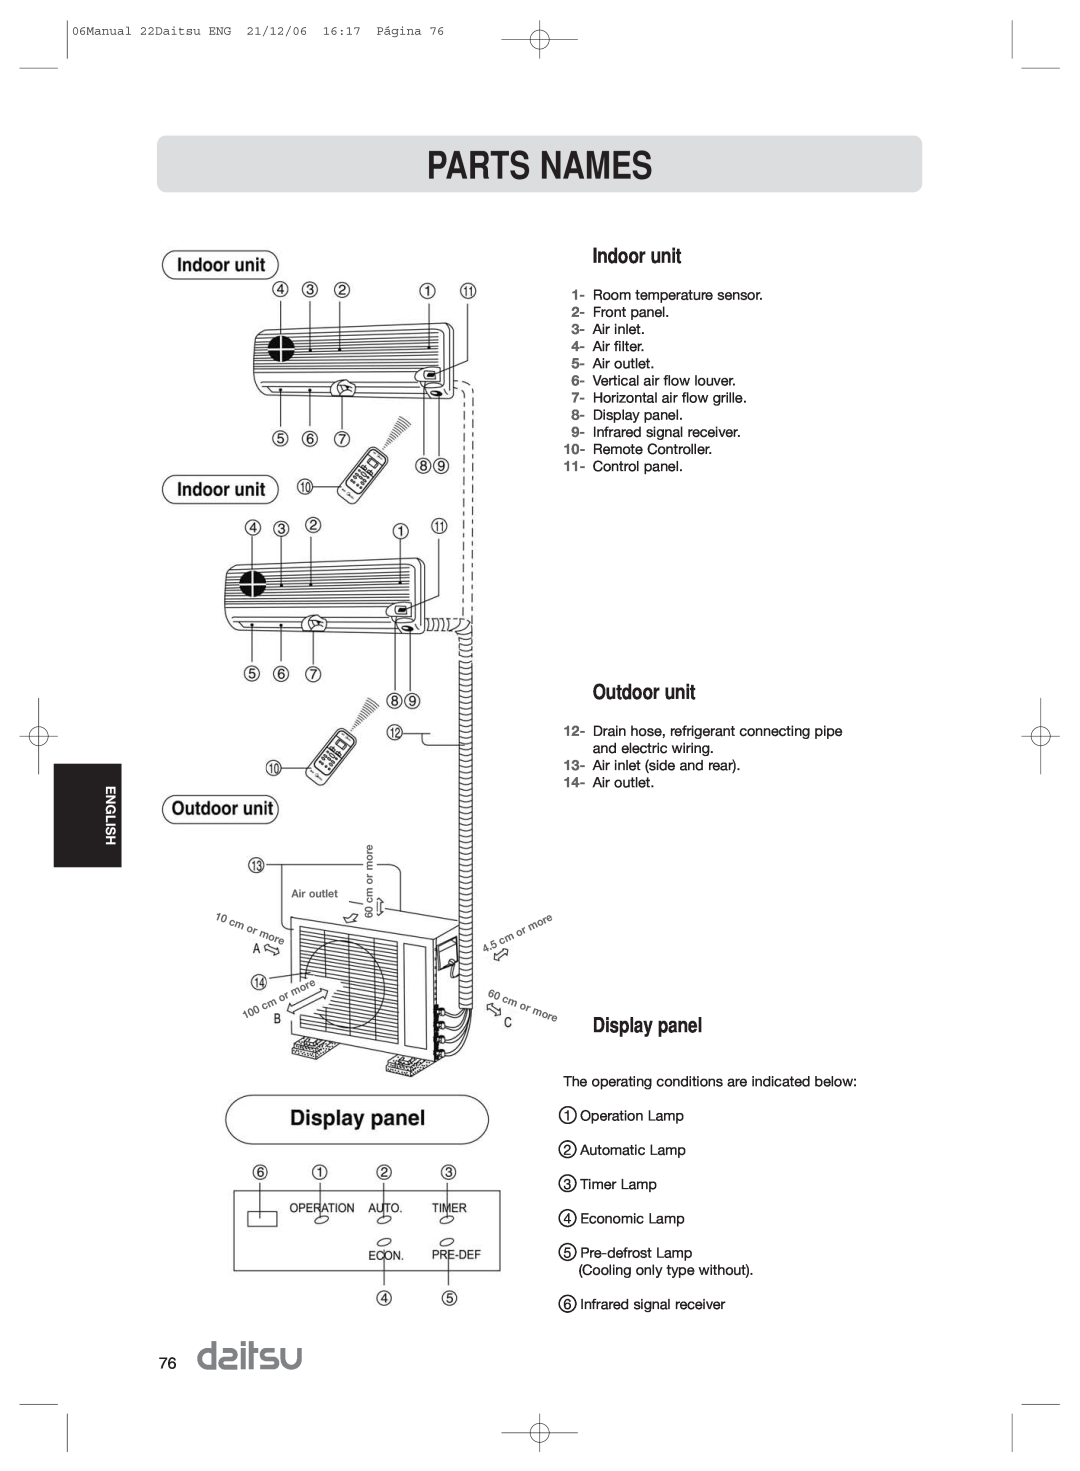 Daitsu ASD 9U2, ASD 129U11 operation manual Parts Names, Outdoor unit, Indoor unit, Display panel 